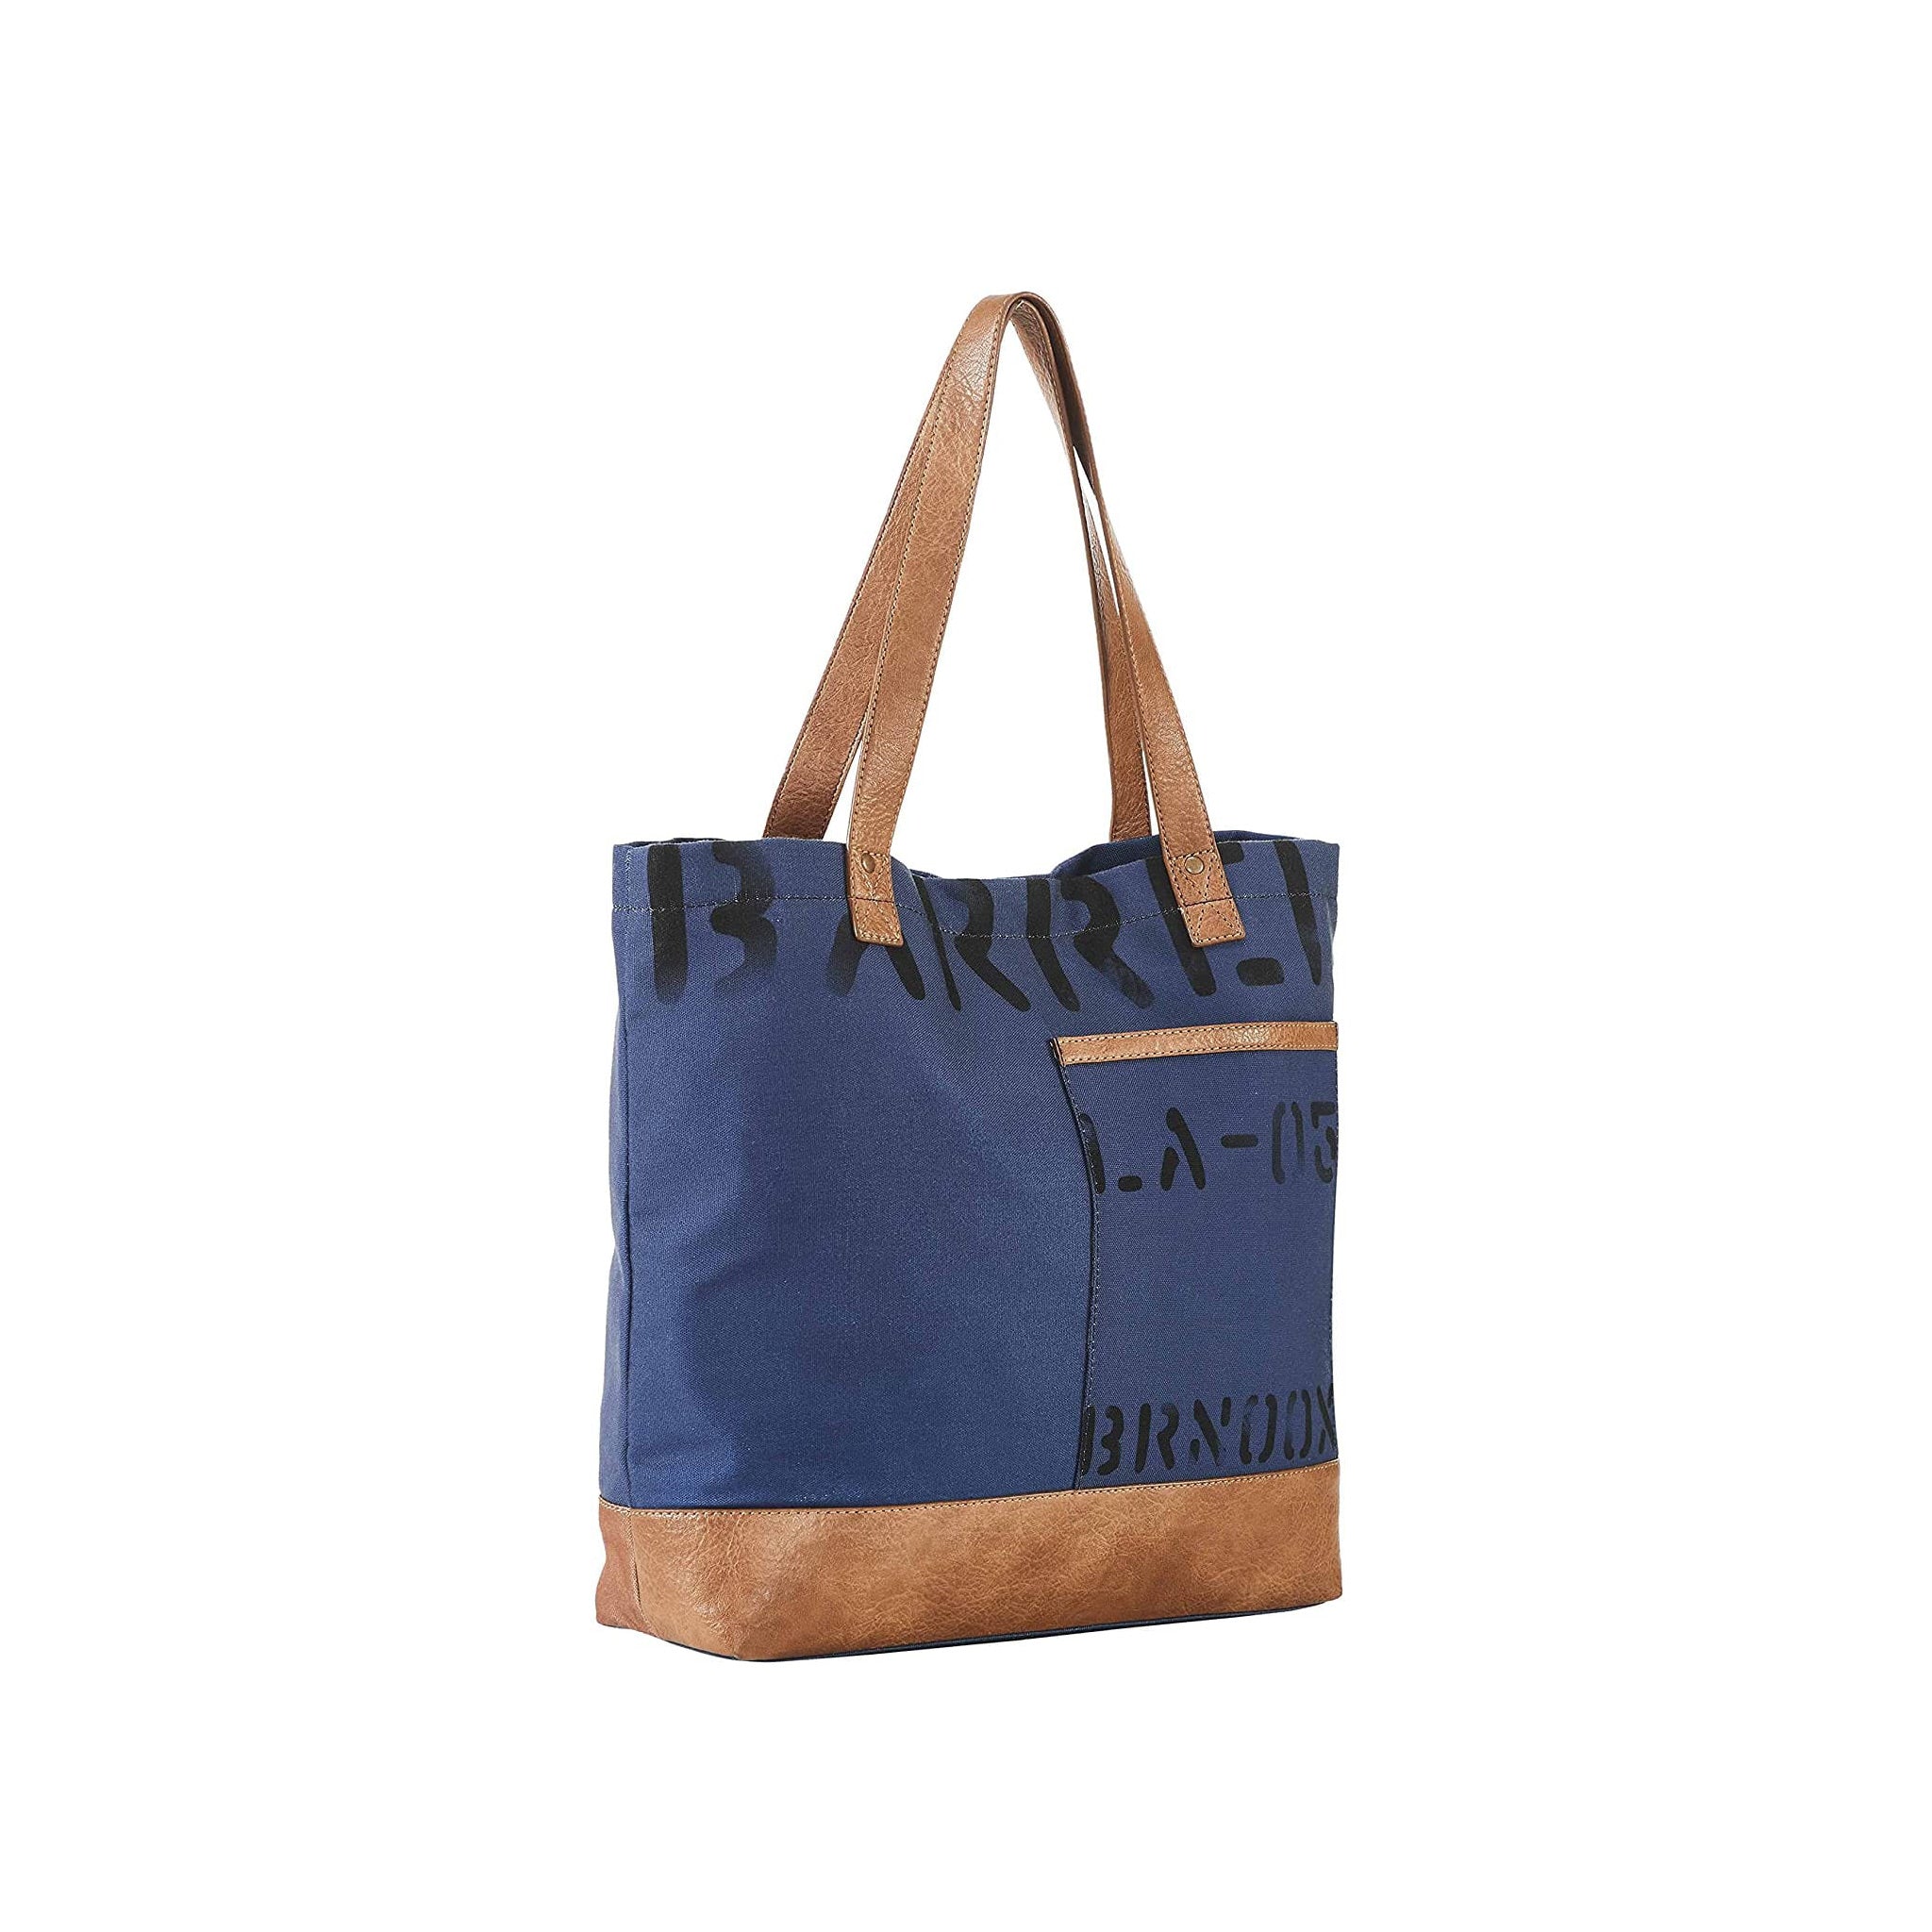 Mona-B Bag Mona B Royal Blue Large Canvas Handbag for Women | Tote Bag for Grocery, Shopping, Travel | Stylish Vintage Shoulder Bags for Women